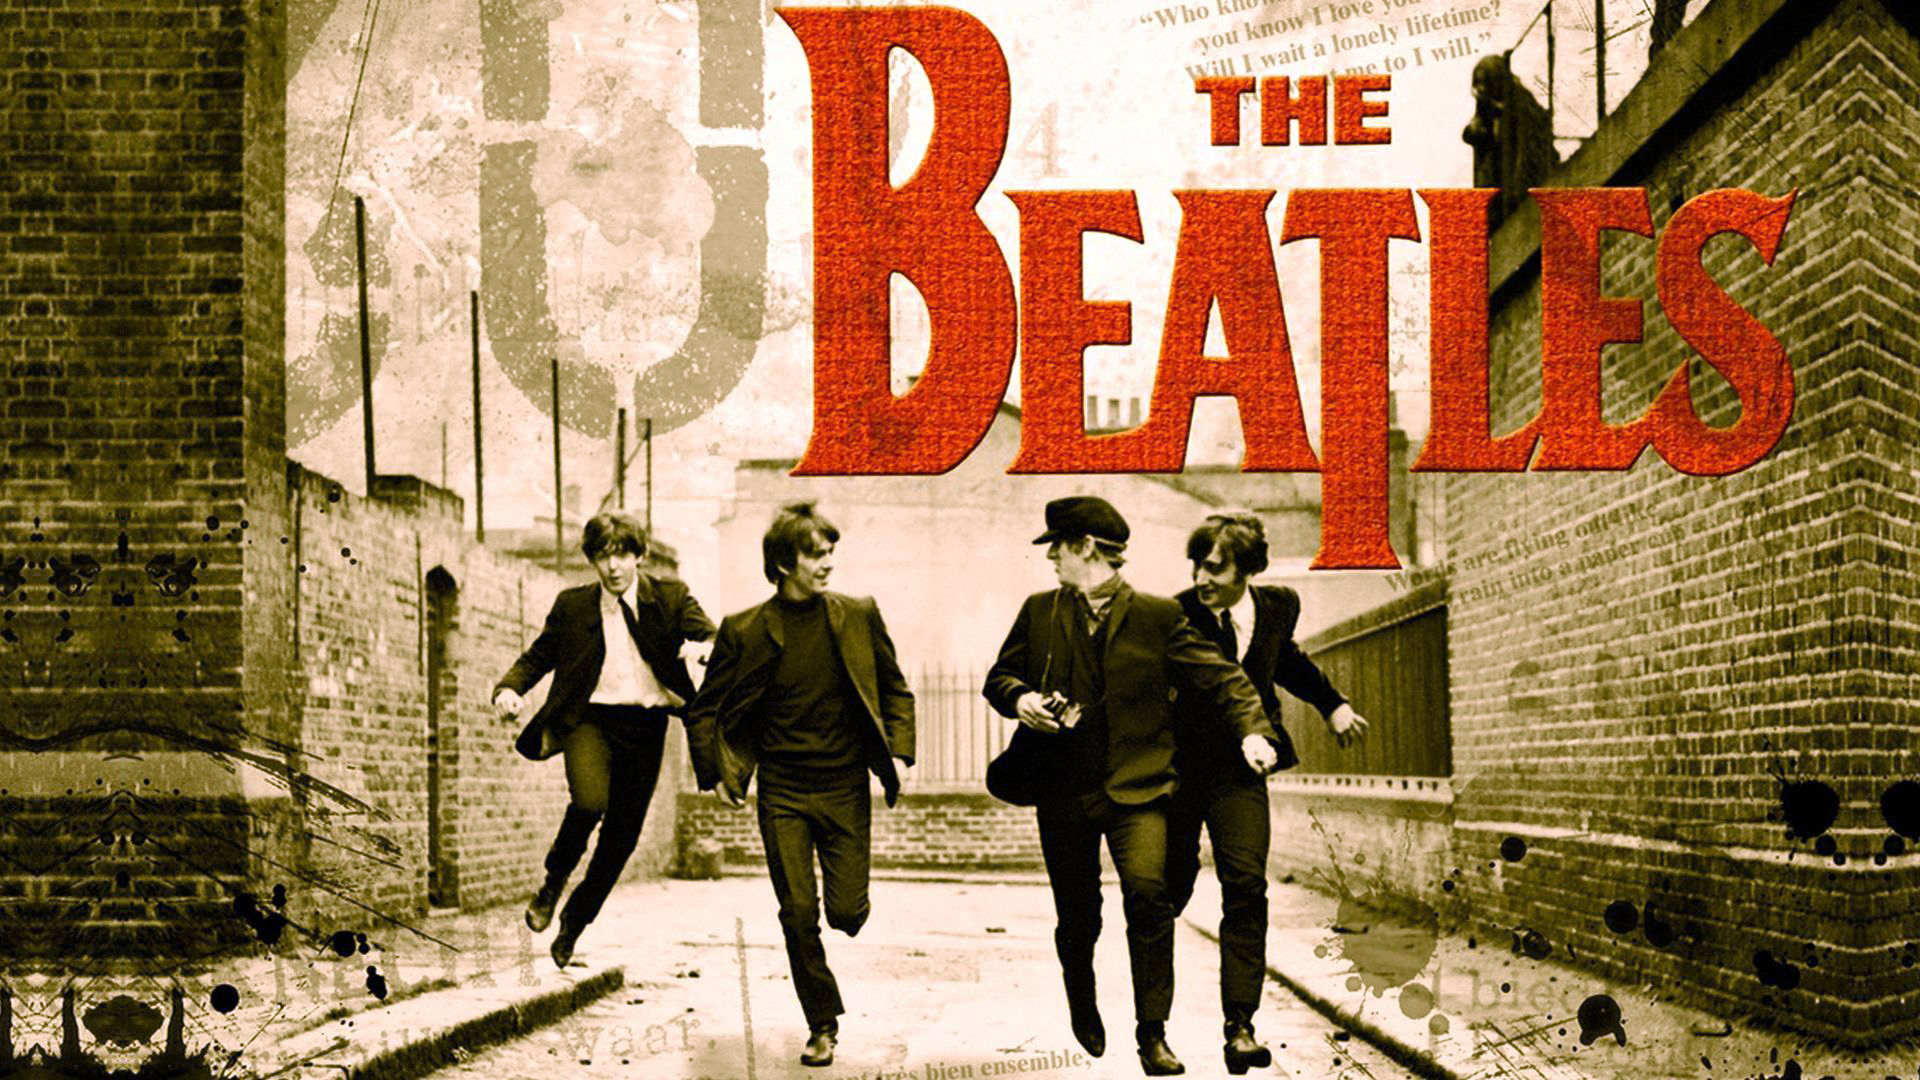 Music The Beatles HD Wallpaper